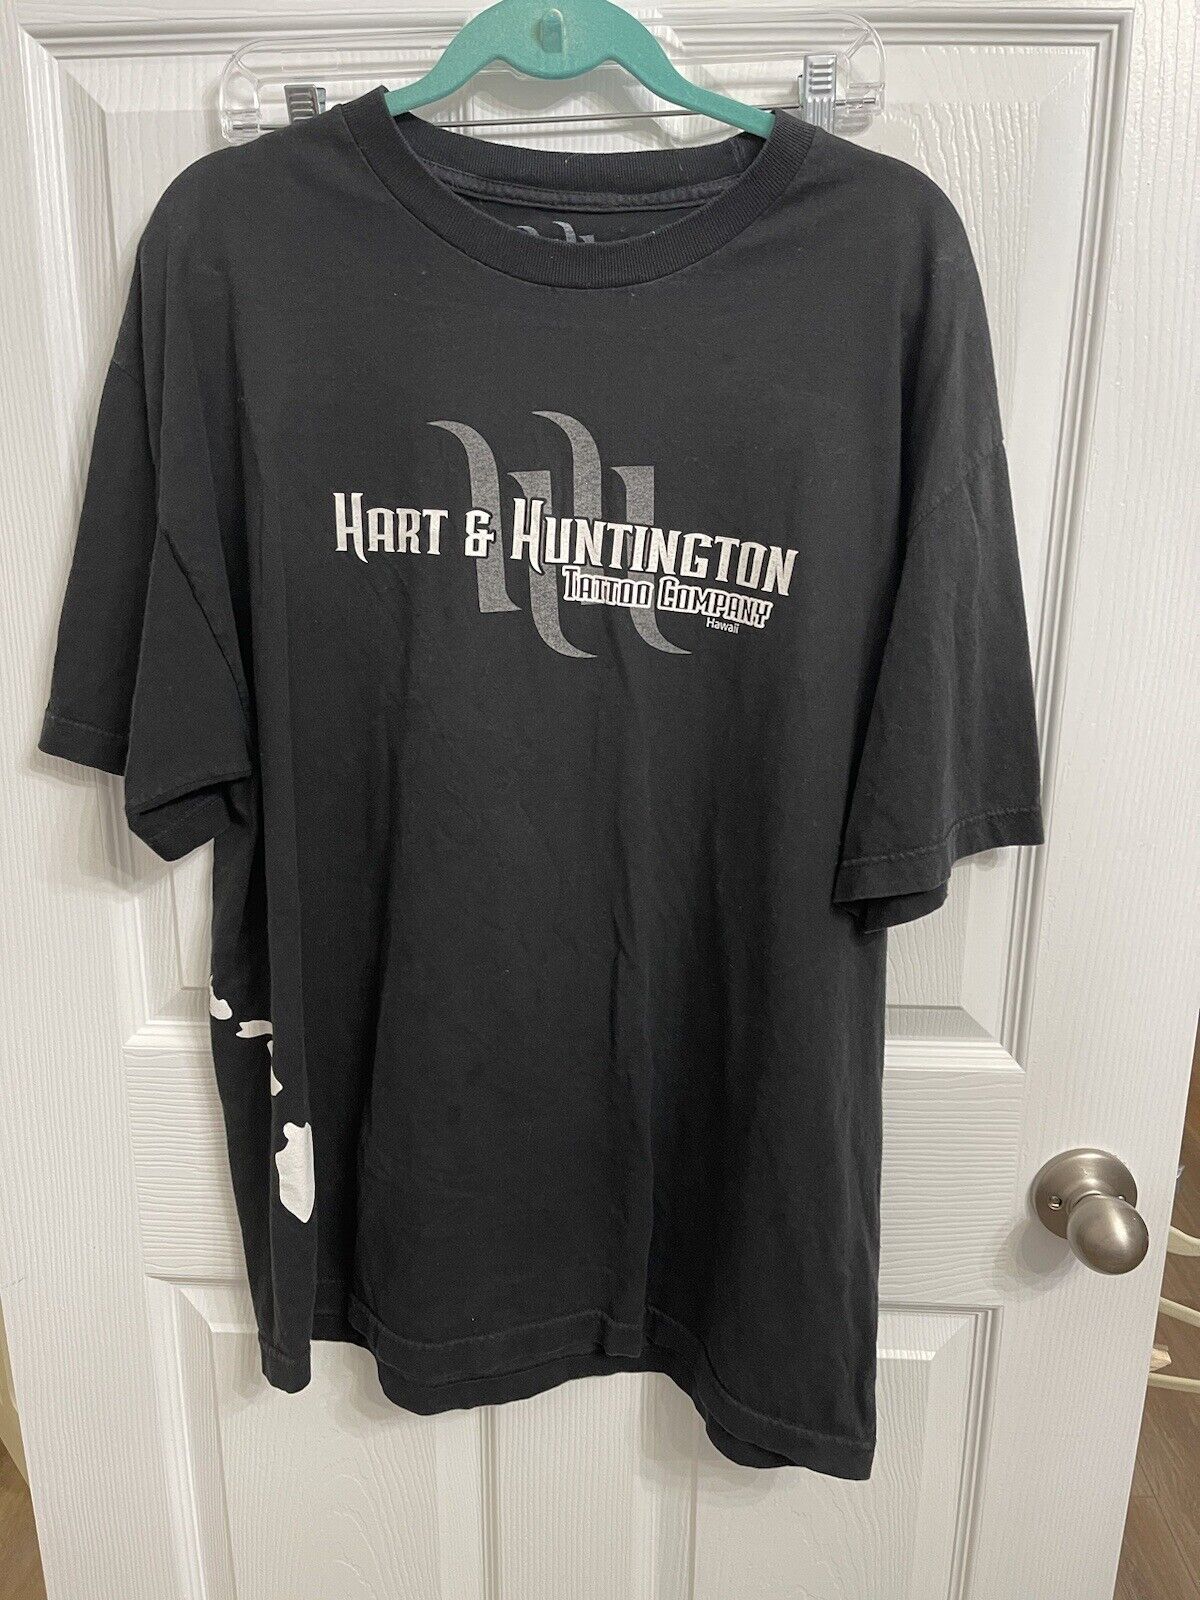 Hart & Huntington Tattoo Shop Oahu Hawaii Rare Shirt Black Corey Hart XL Tshirt